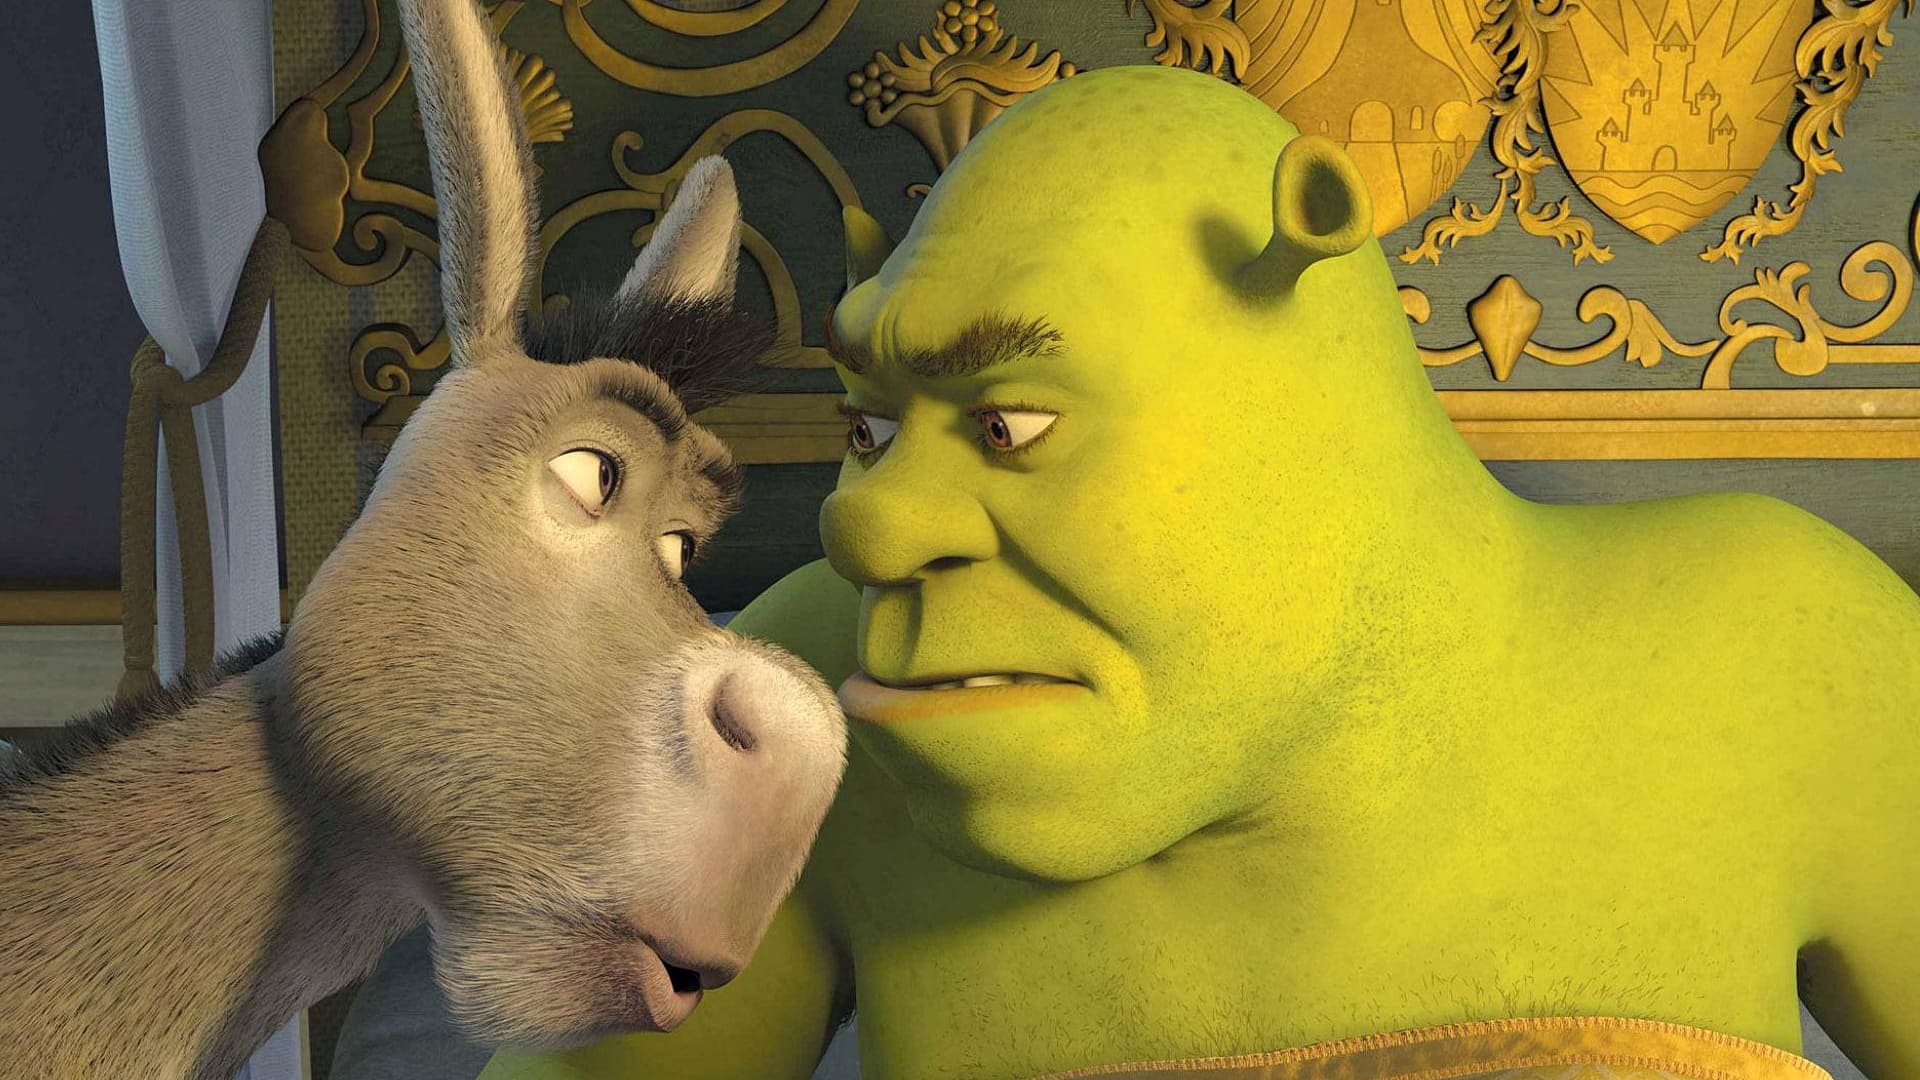 Shrek le troisième (2007)